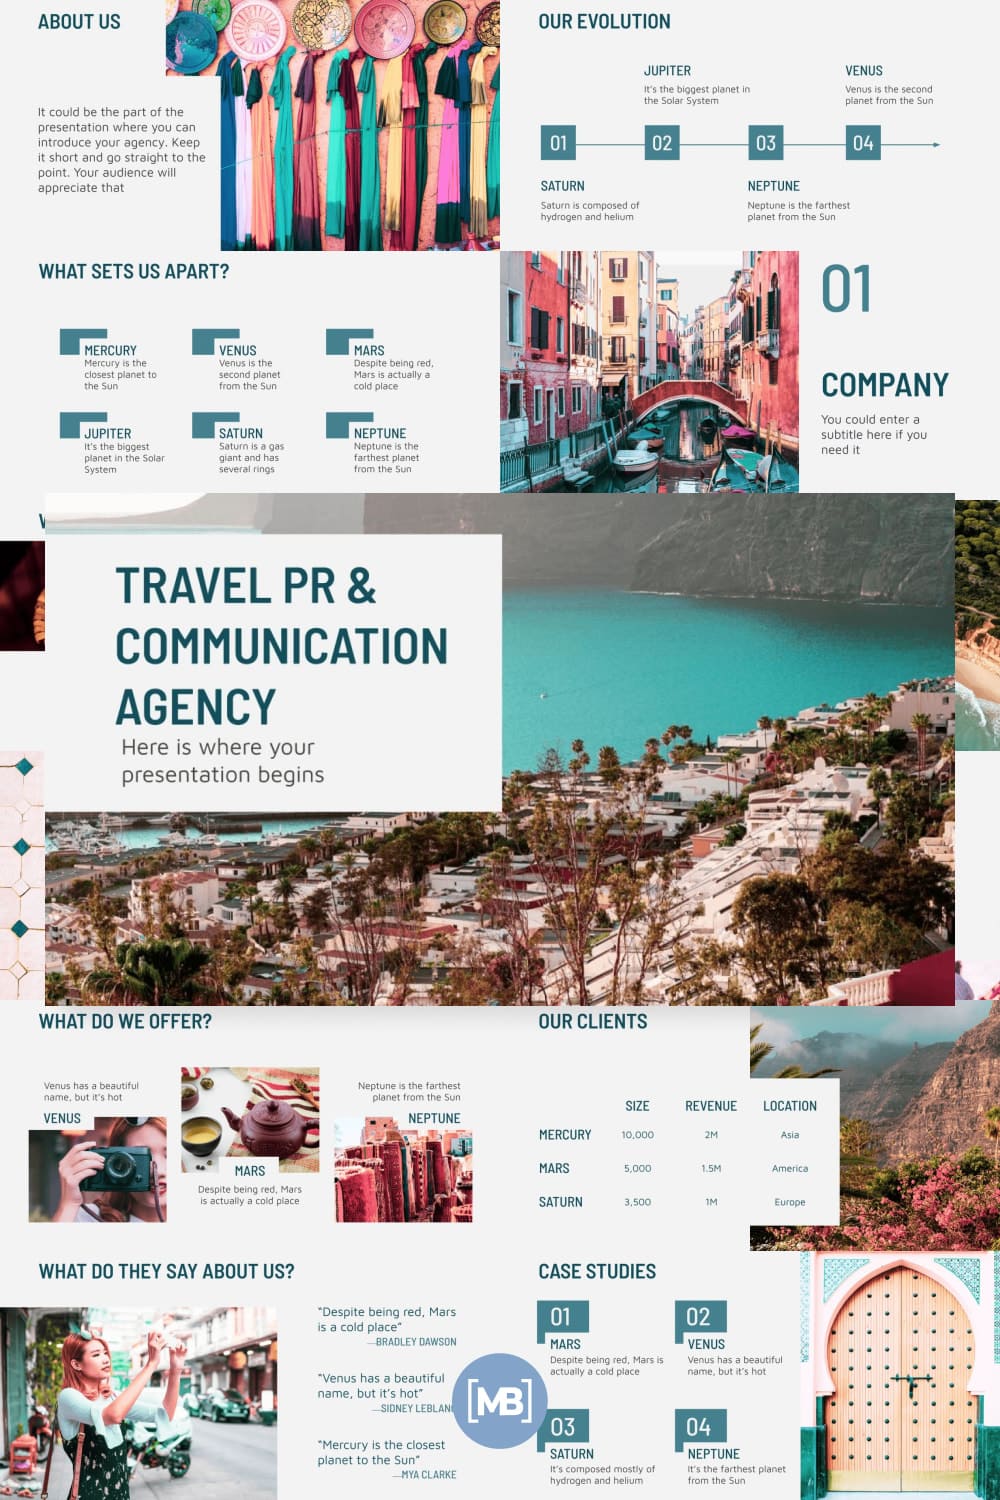 Travel PR & Communication agency.